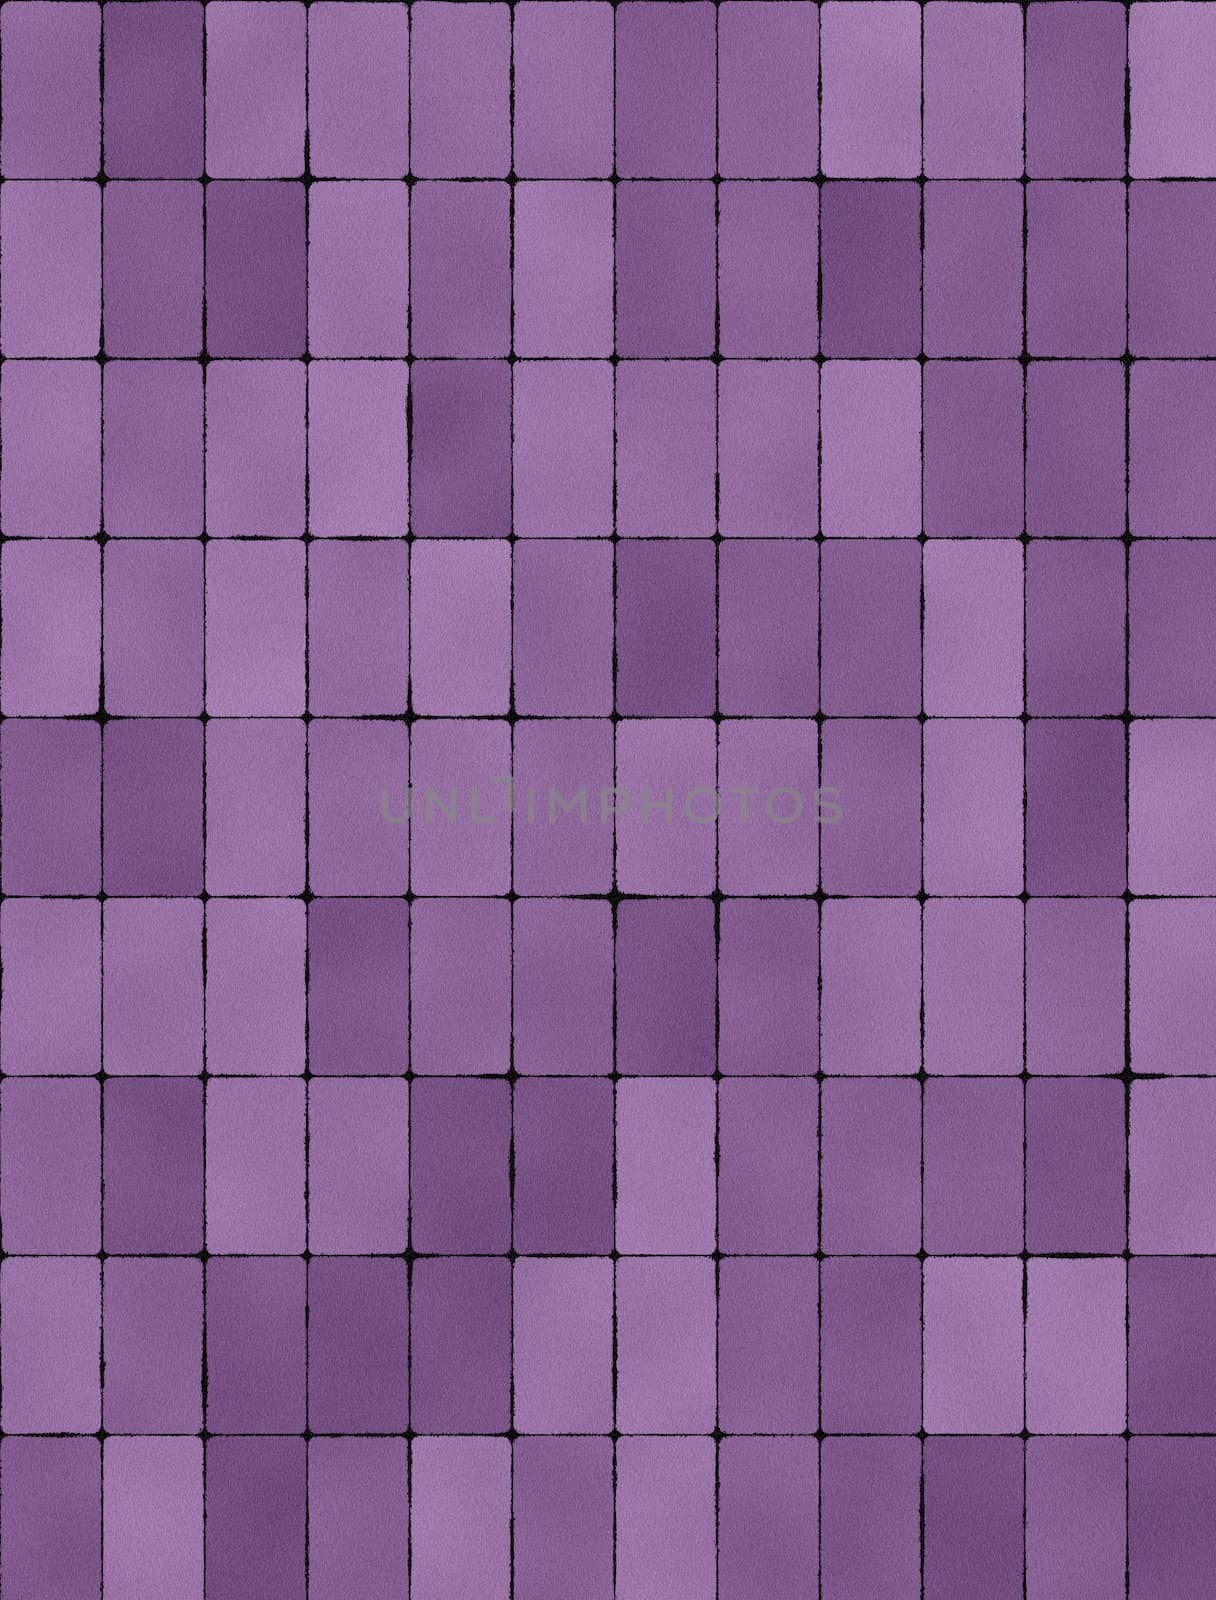 Seamless texture of purple tiles